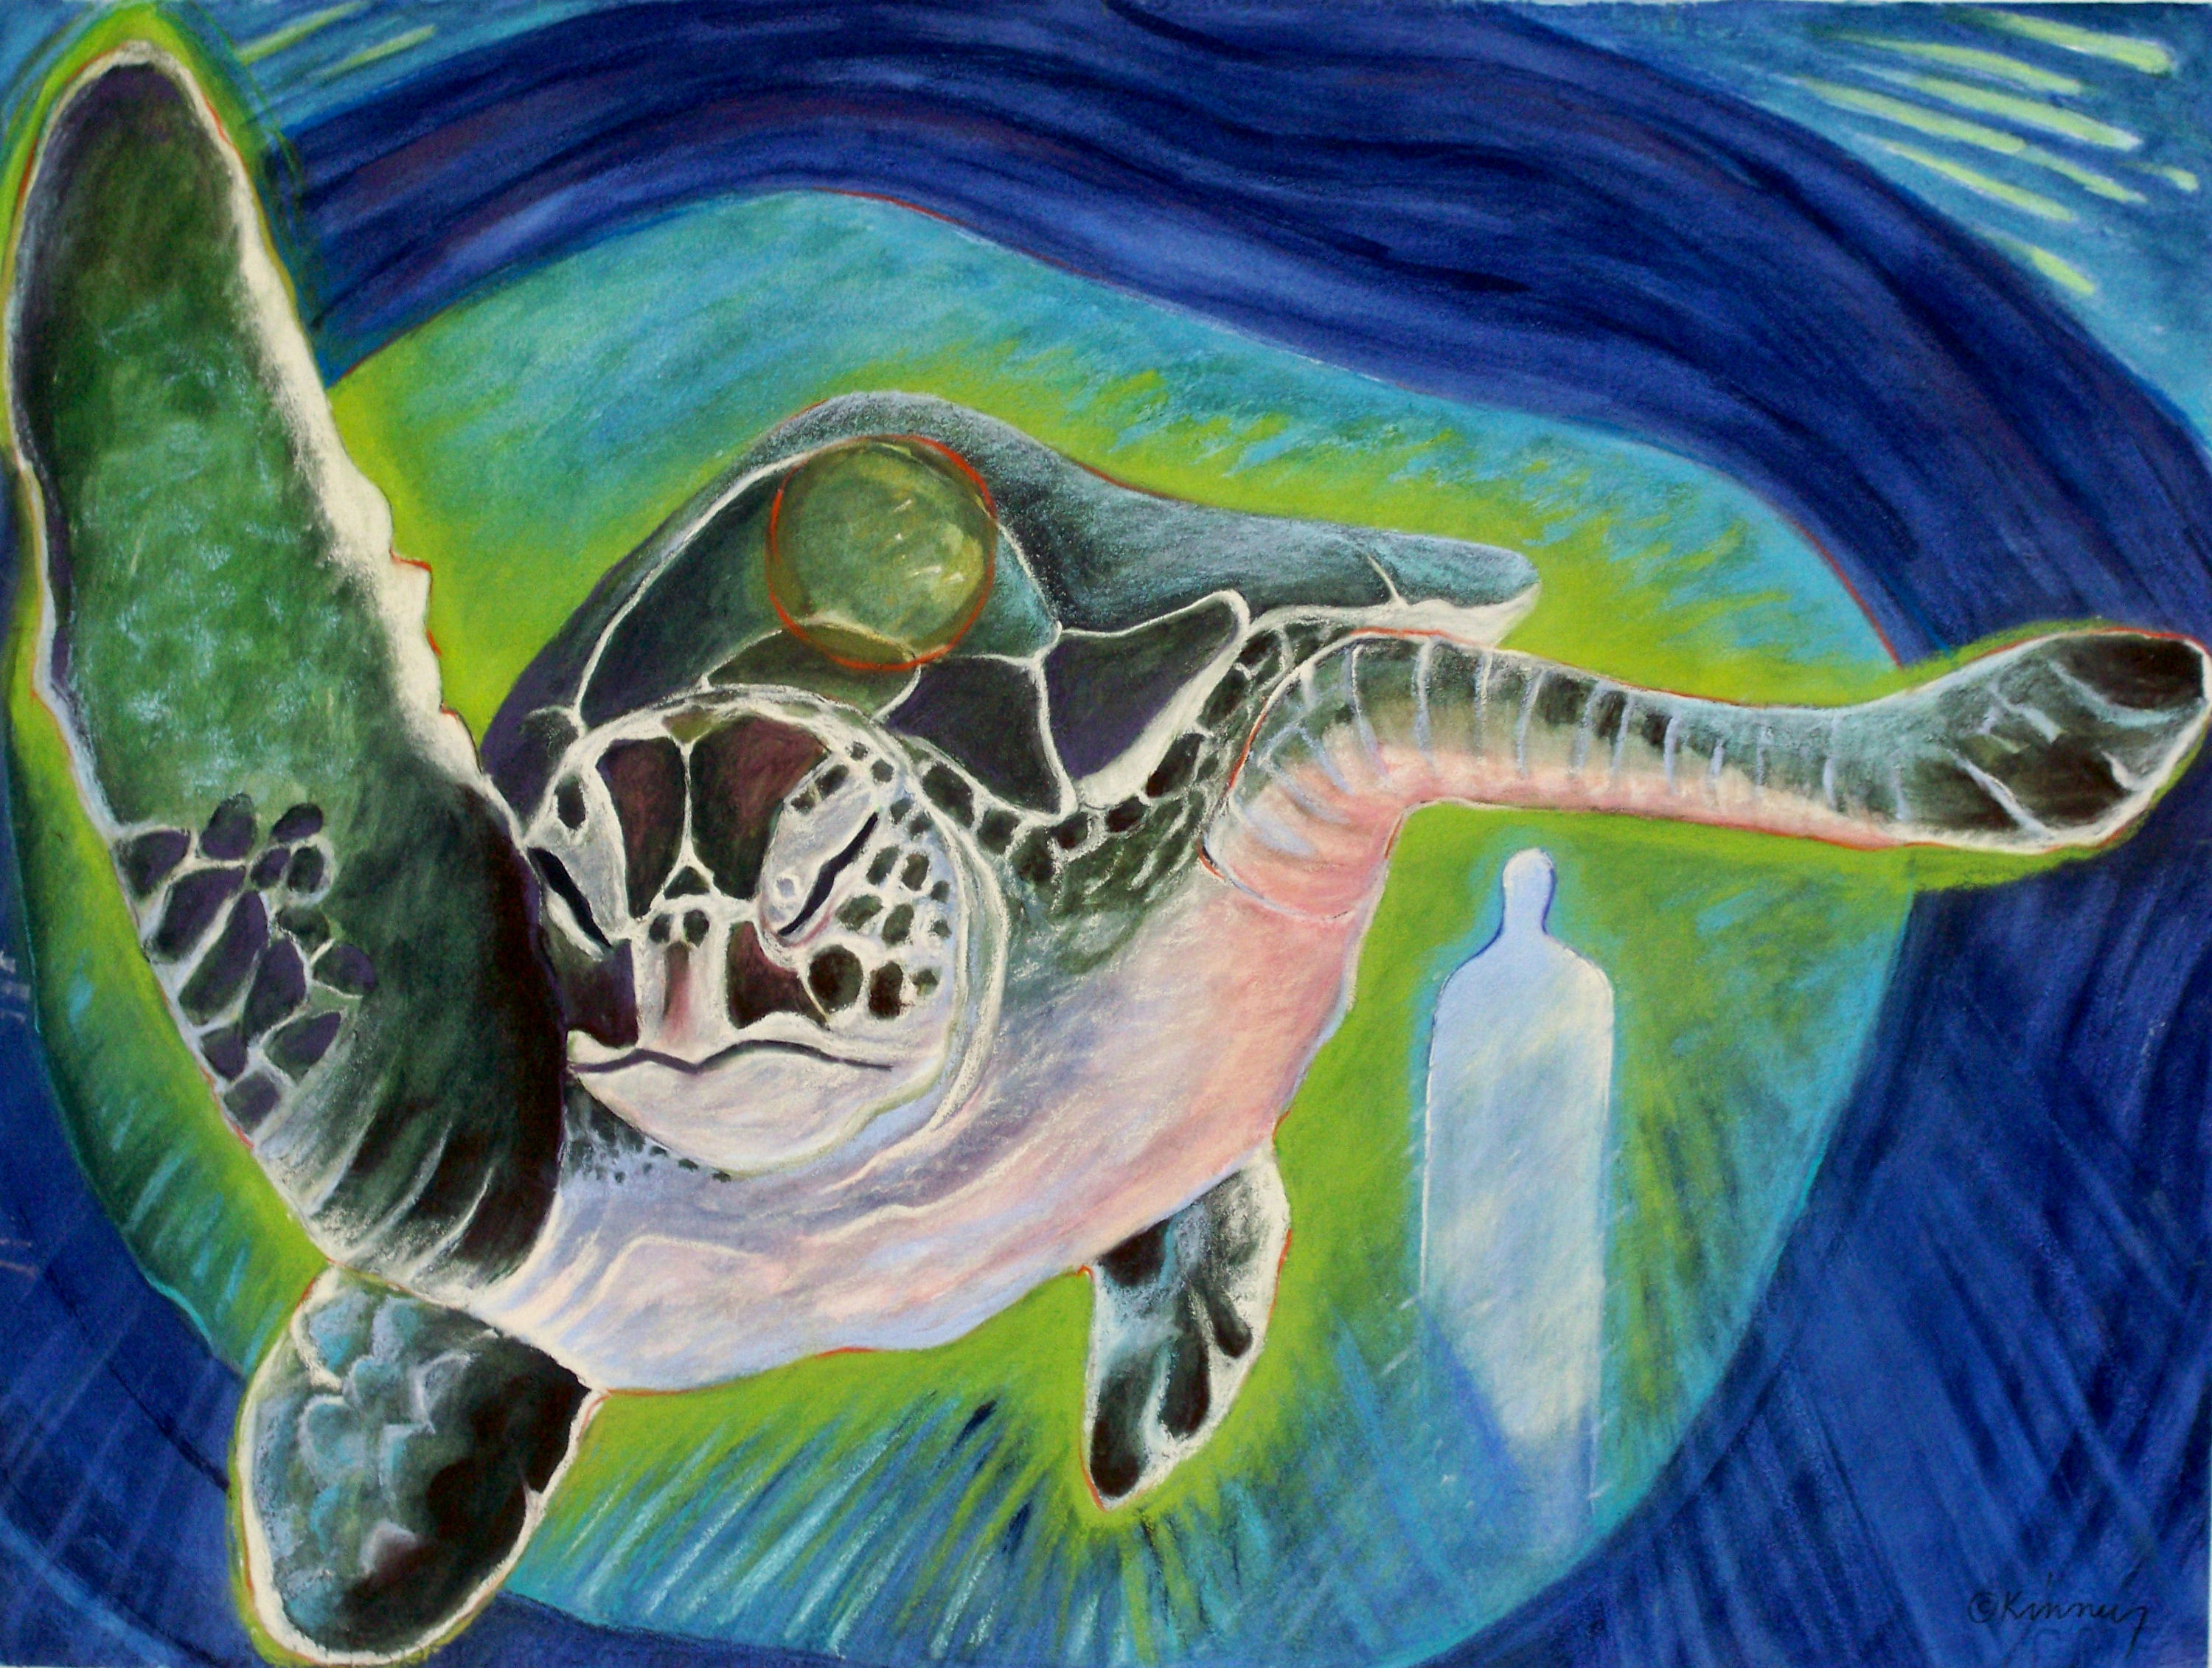 K327-G:Turtle Swims North